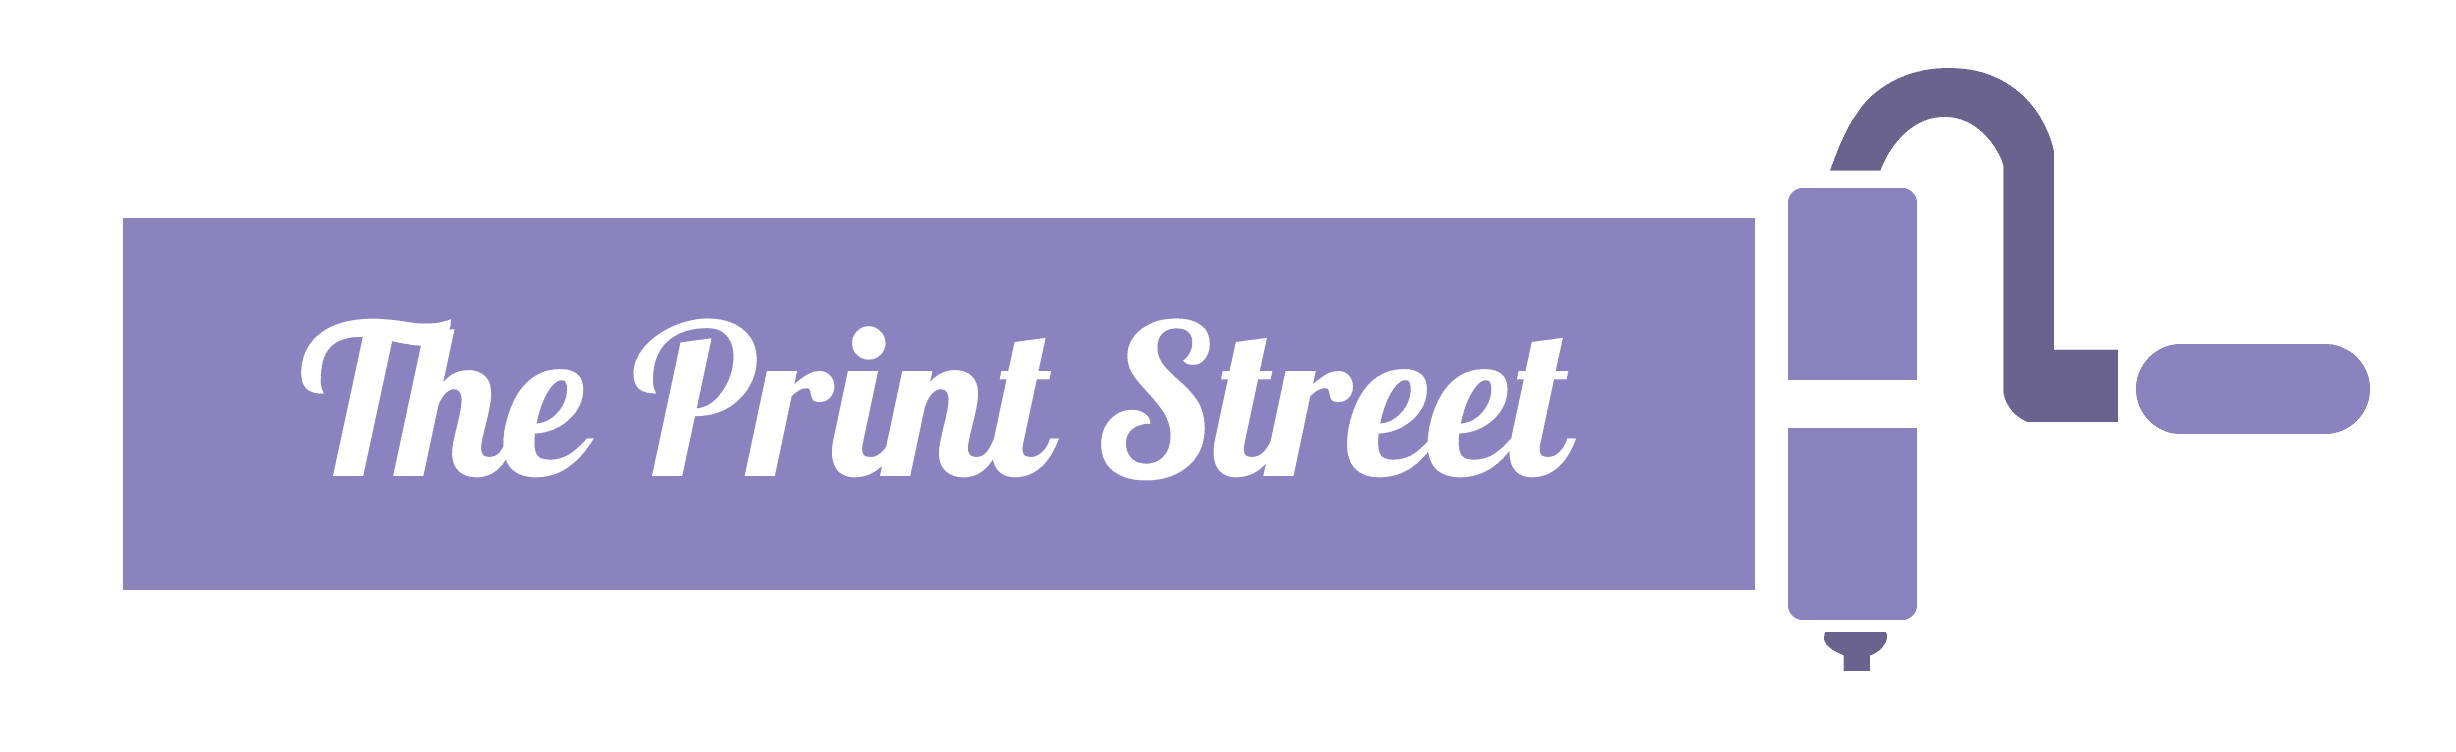 The Print Street